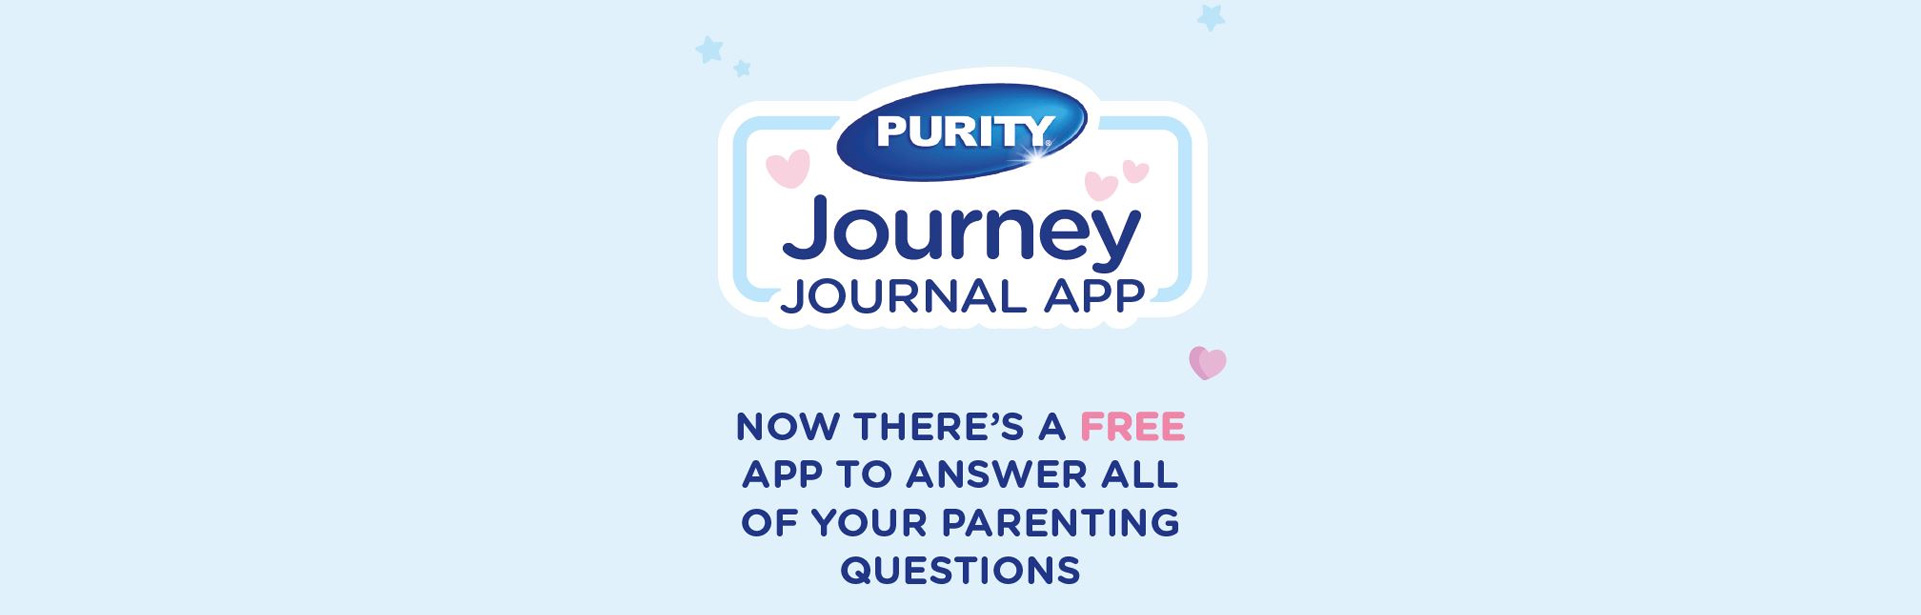 Purity Journey App